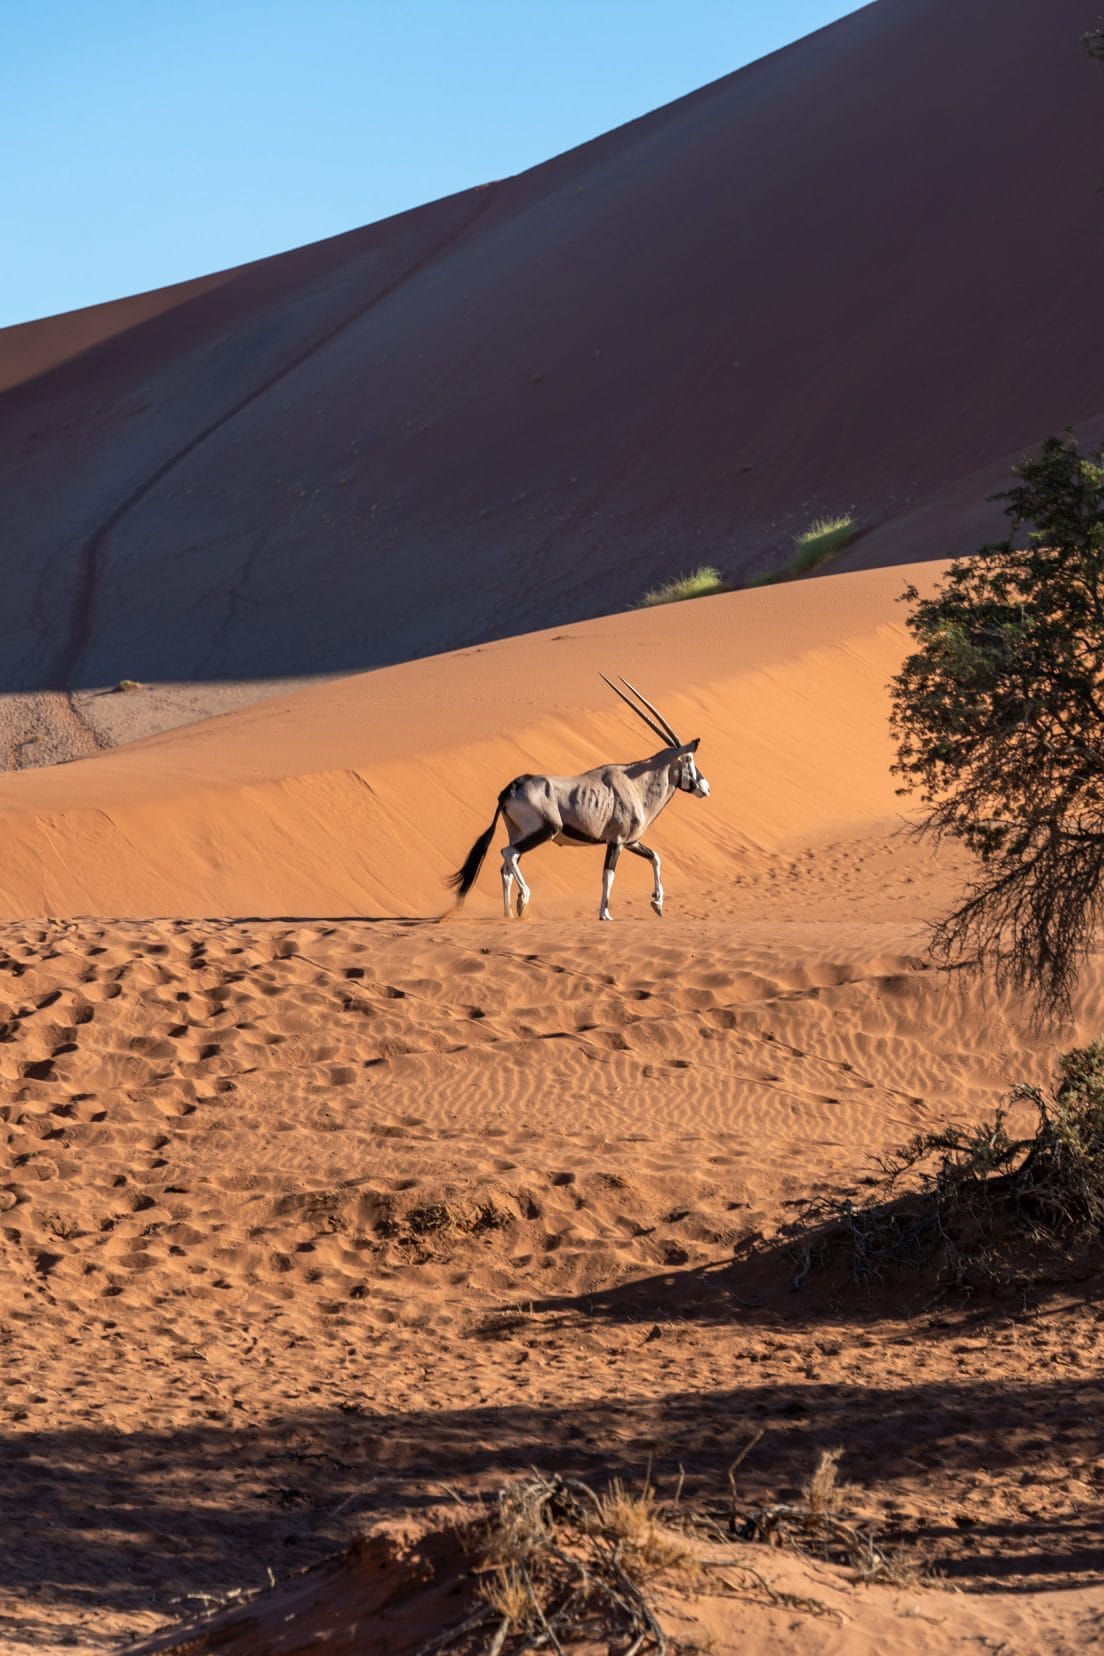 Oryx walking in sand dune by Big Mama